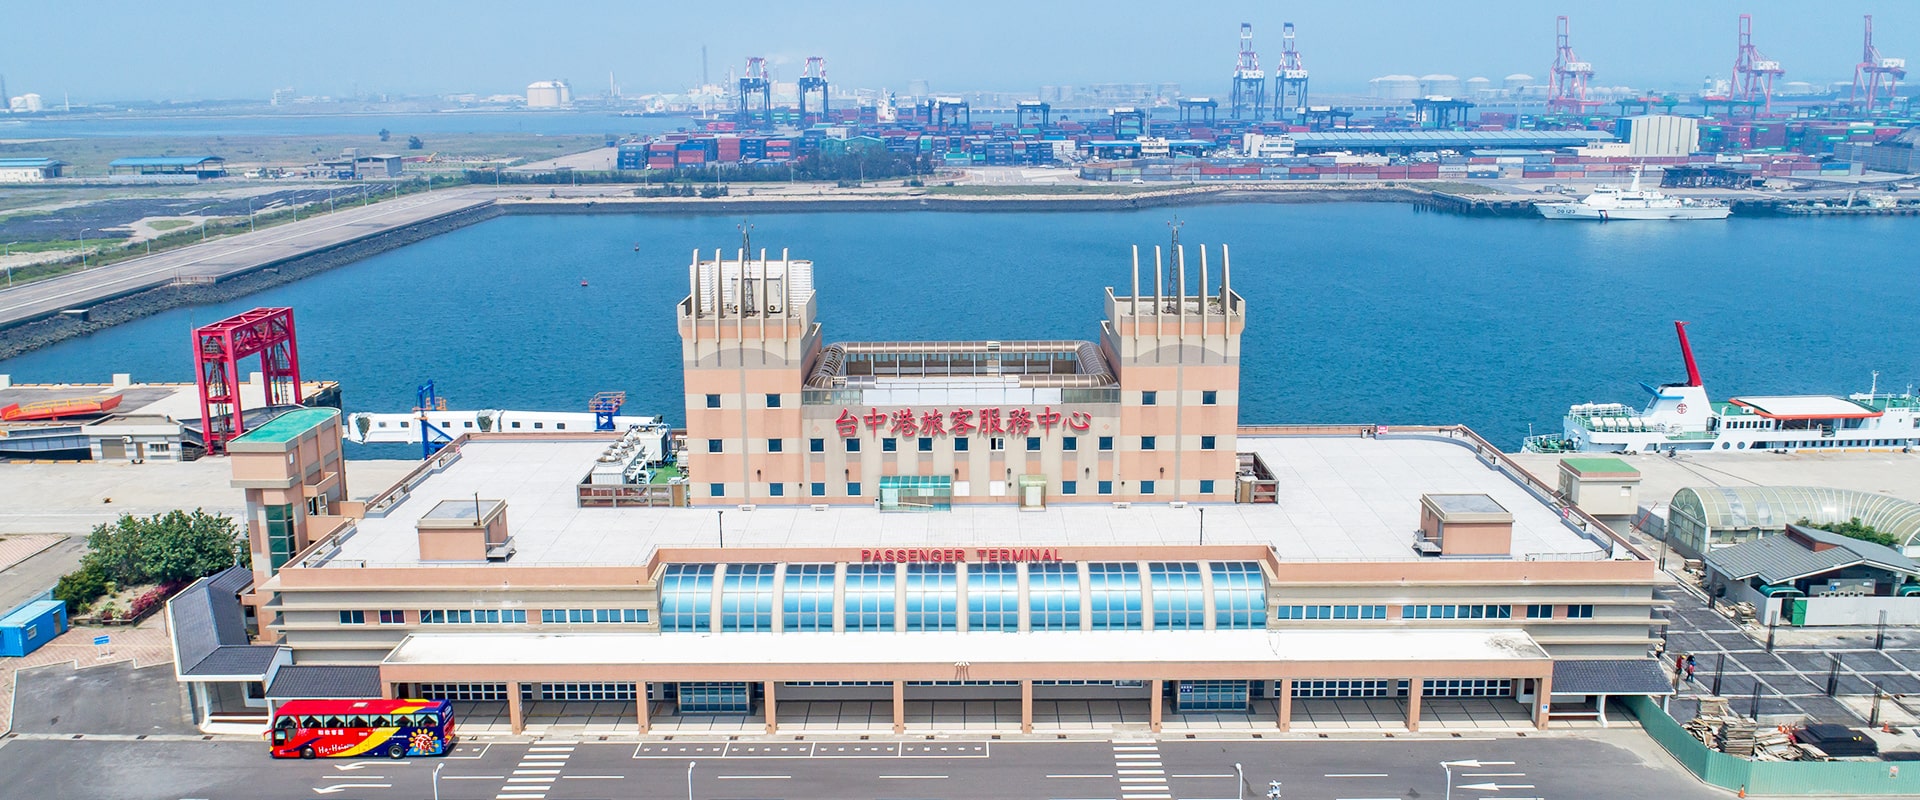 Taichung Cruise Passenger Terminal